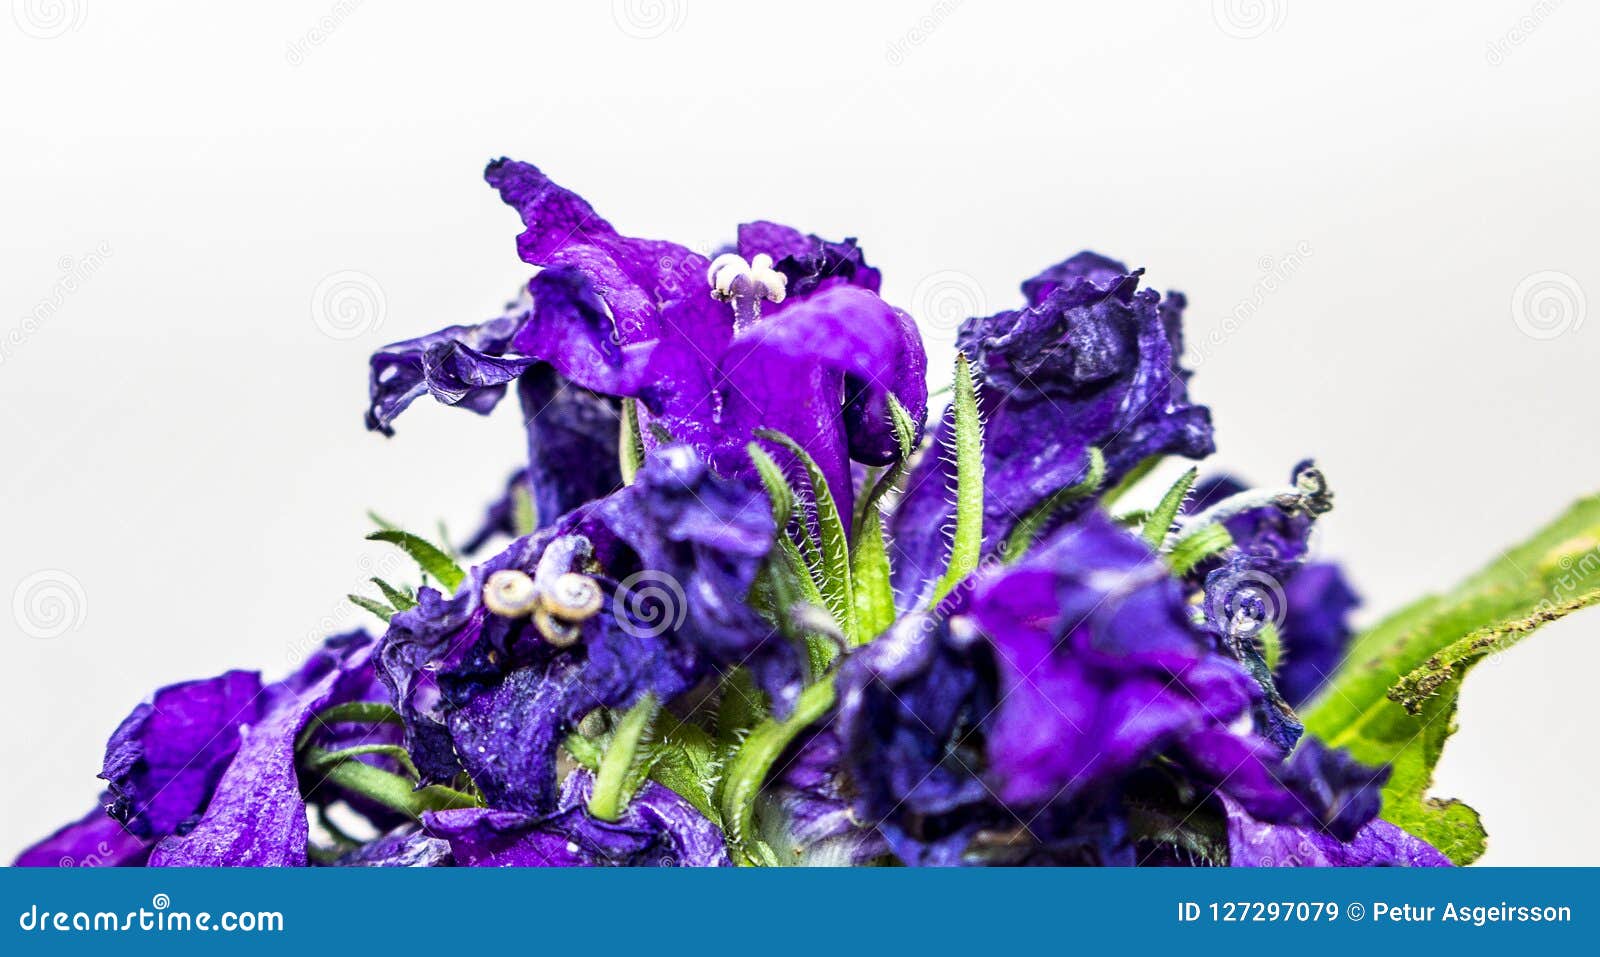 Blue Flower on White Isolated Background Stock Image - Image of blossom